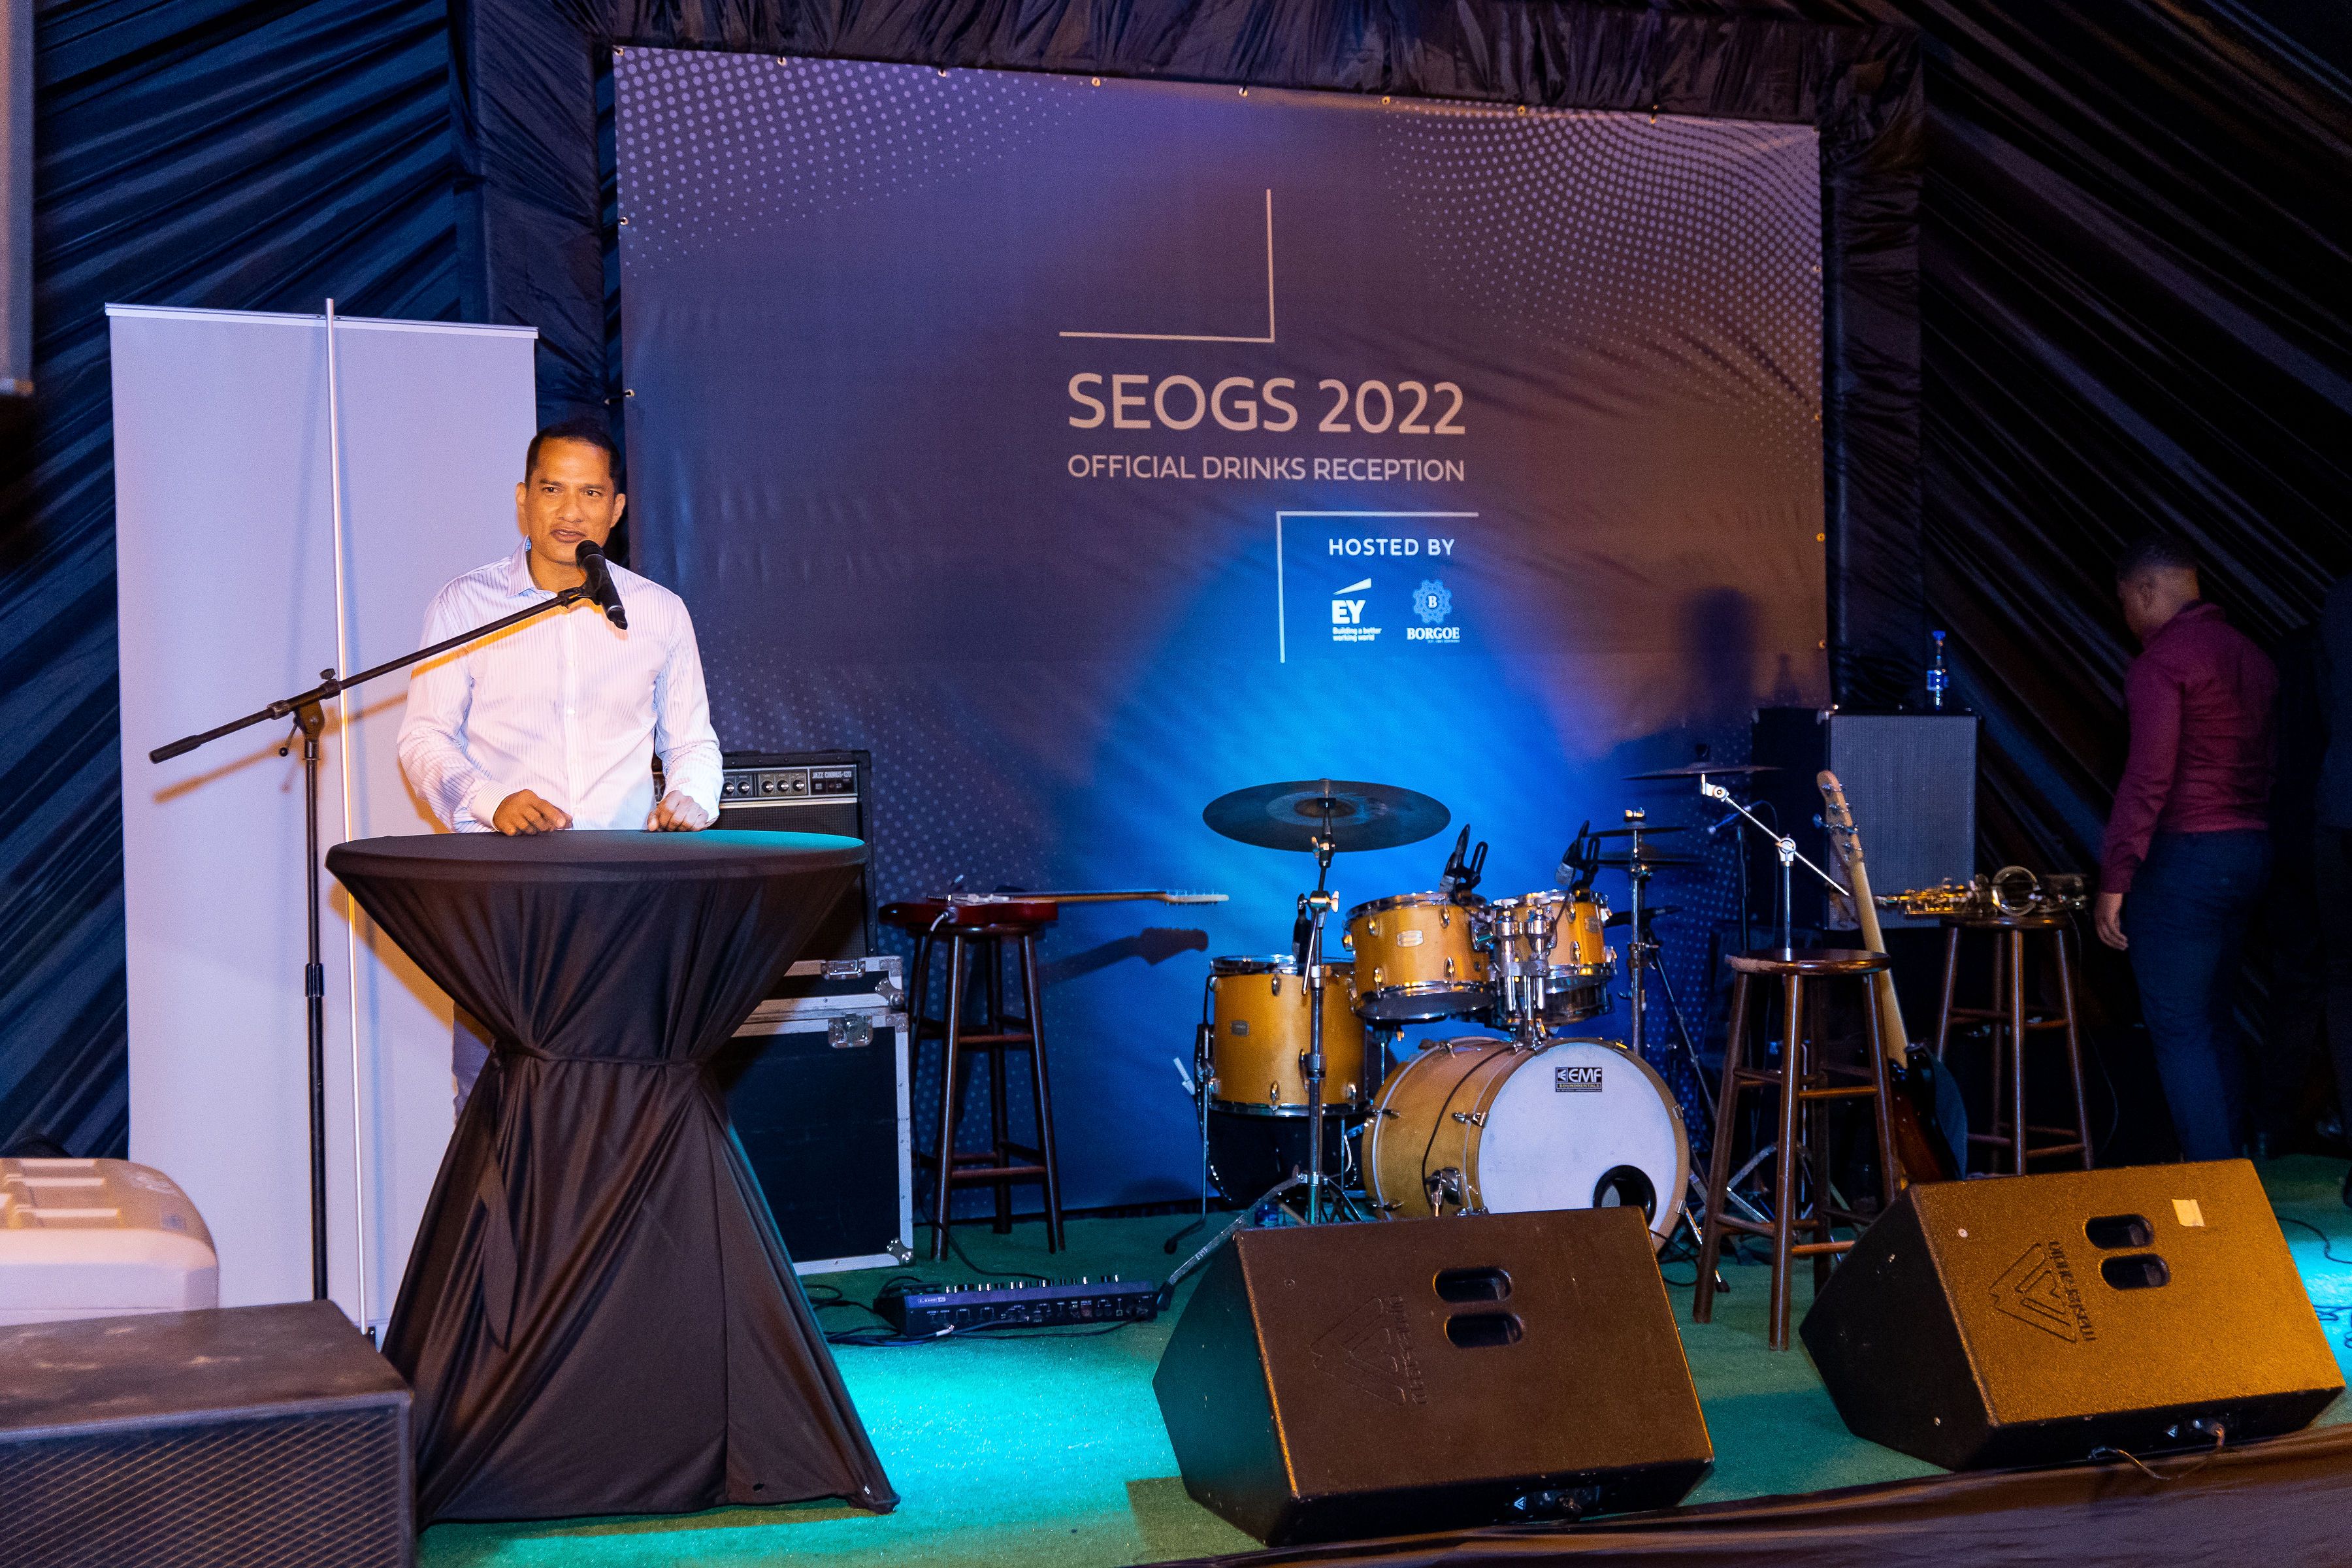 SEOGS 2022 - NETWORKING